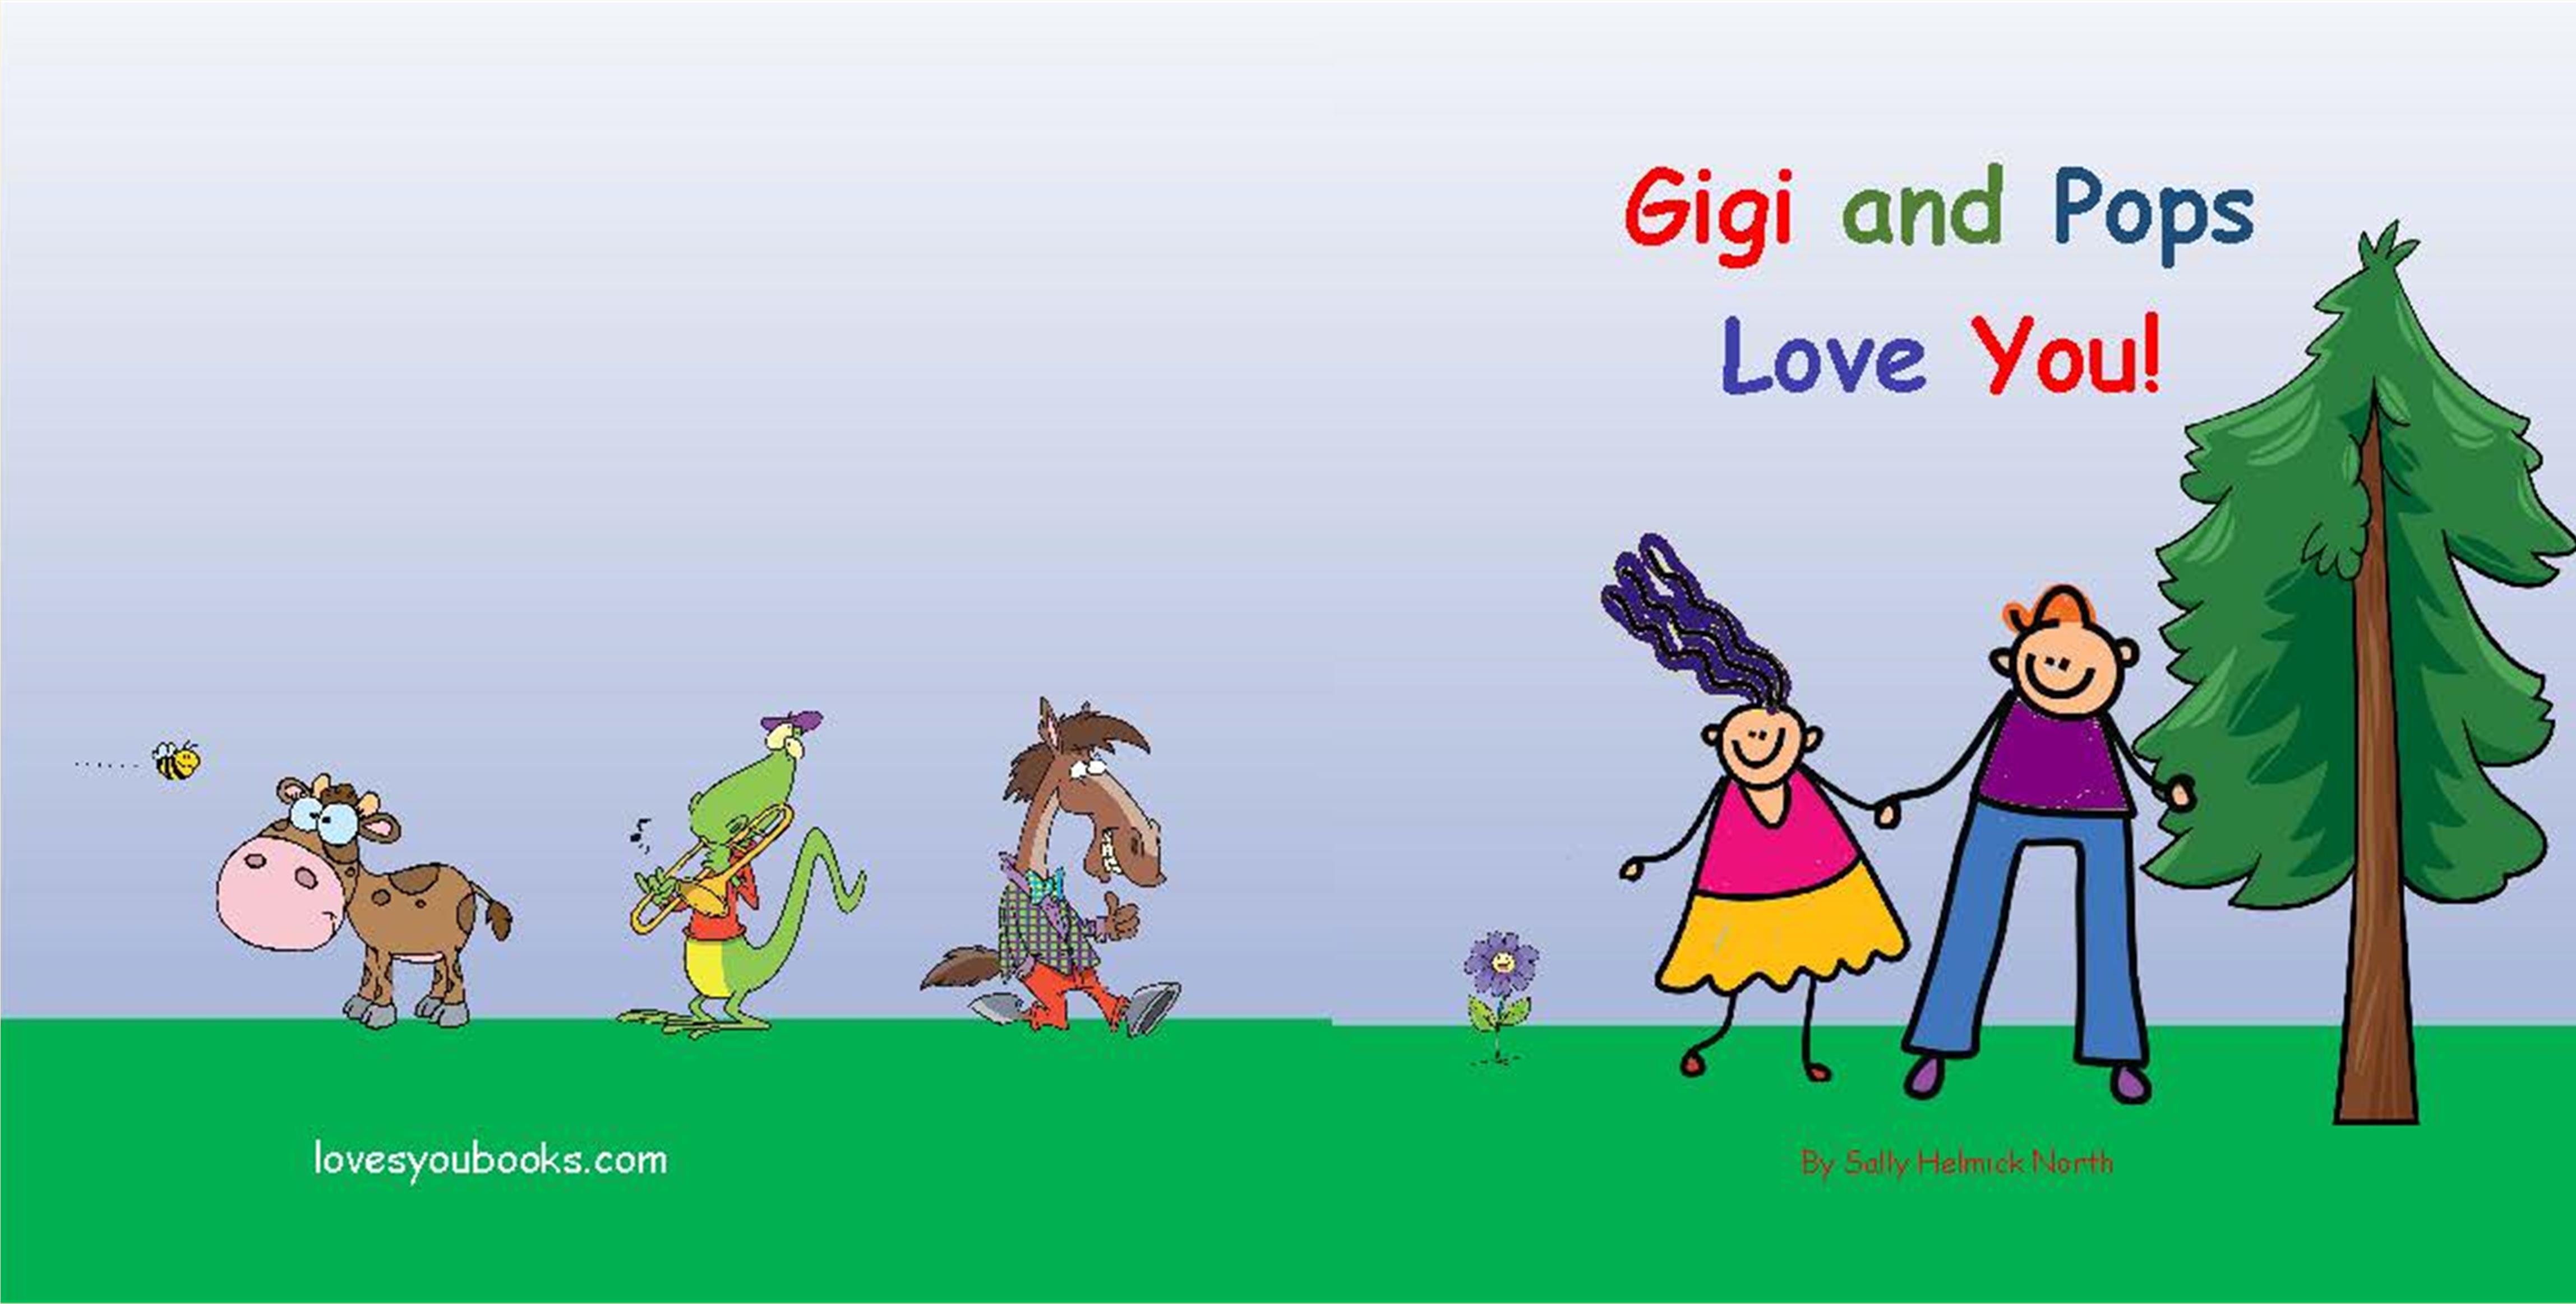 Gigi and Pops Love You! cover image